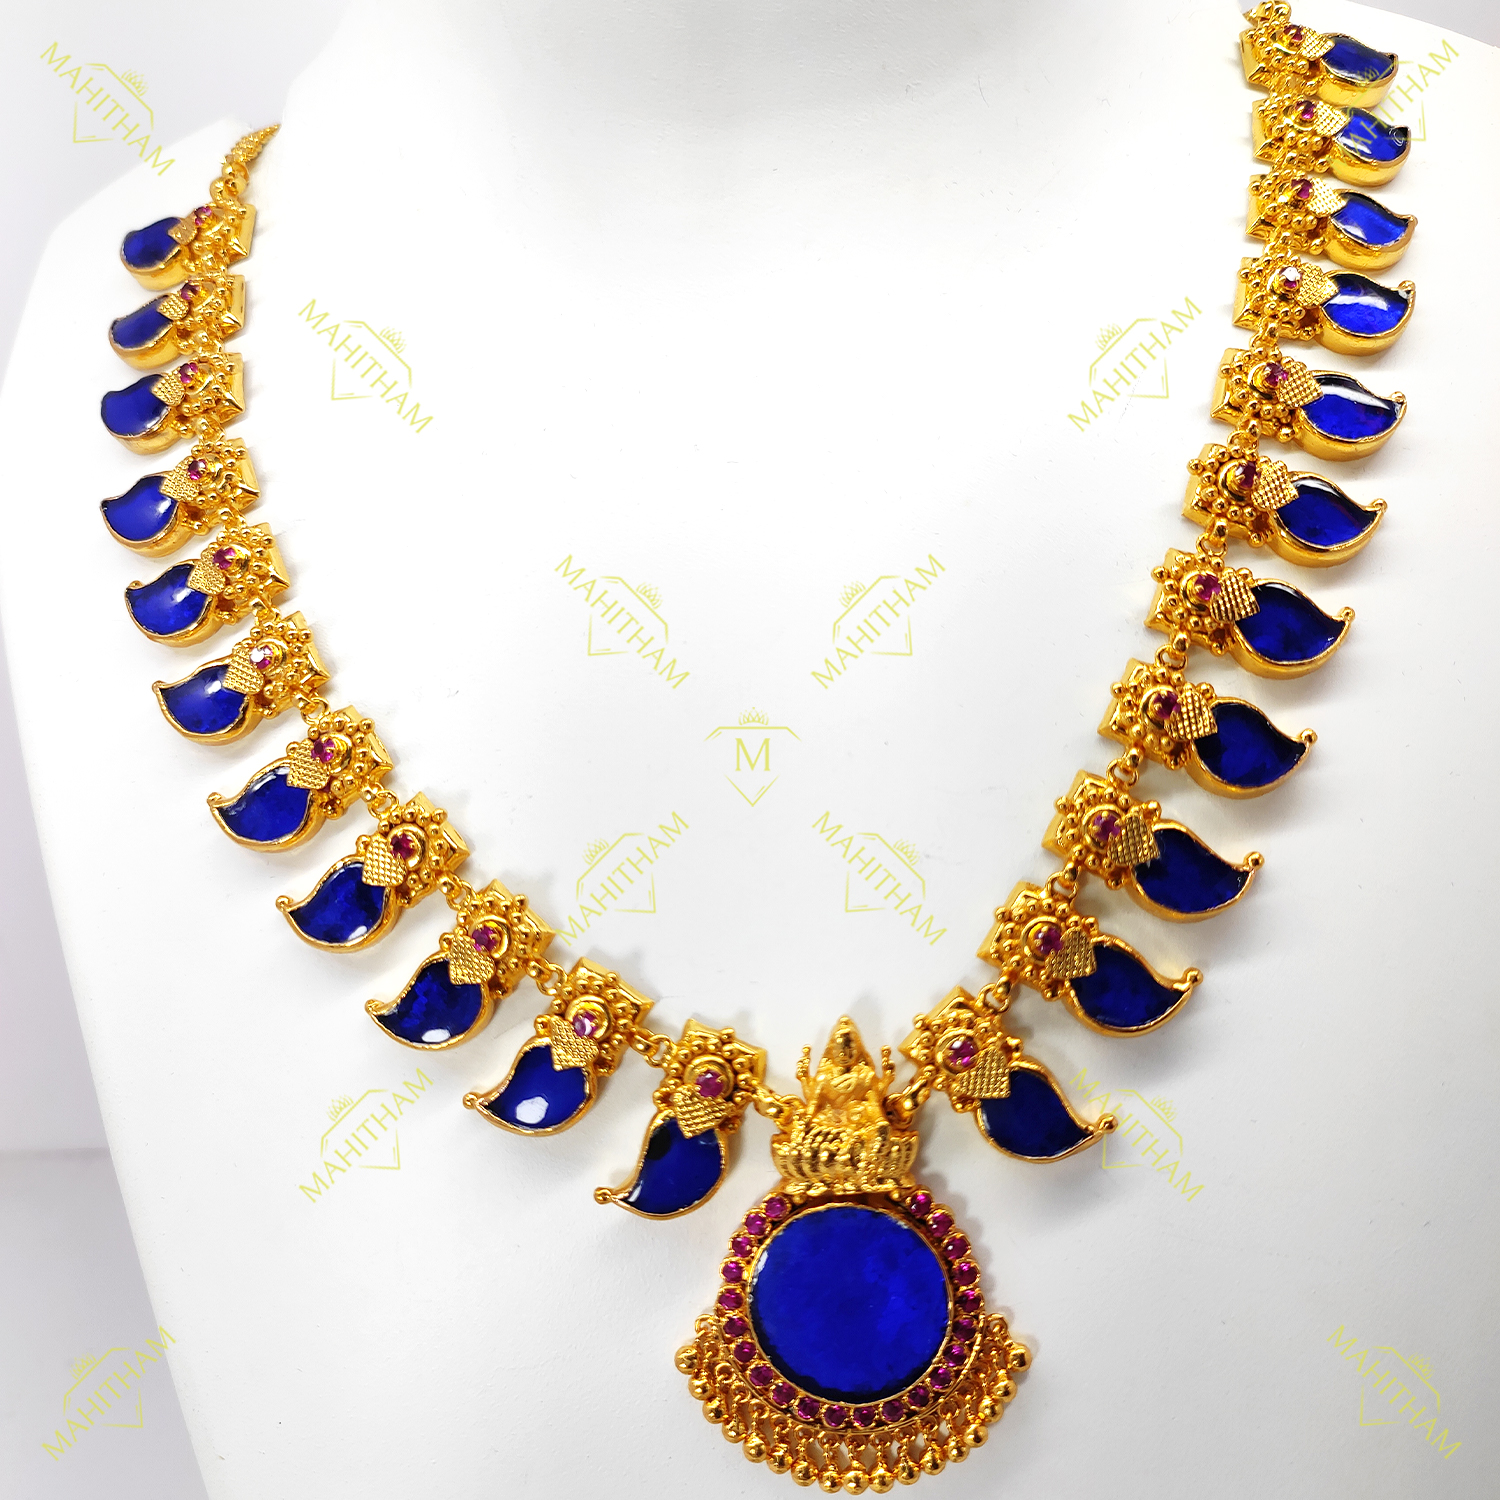 Sukkhi Gold Plated Blue Pearl Necklace Set for Women - Sukkhi.com